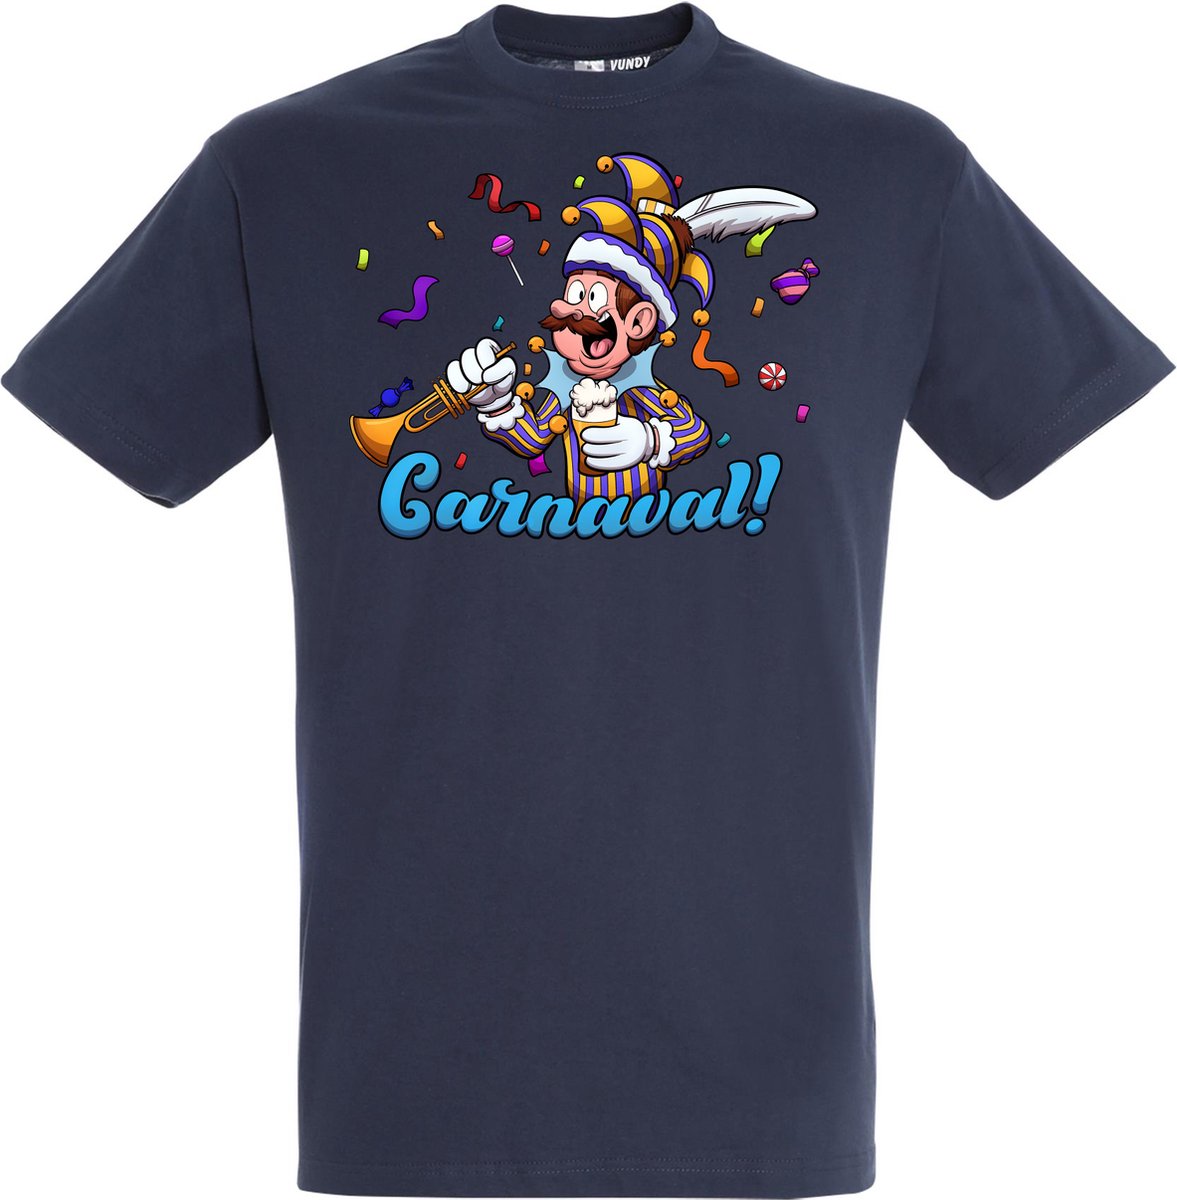 T-shirt kinderen Carnavalluh | Carnaval | Carnavalskleding Kinderen Baby | Navy | maat 128